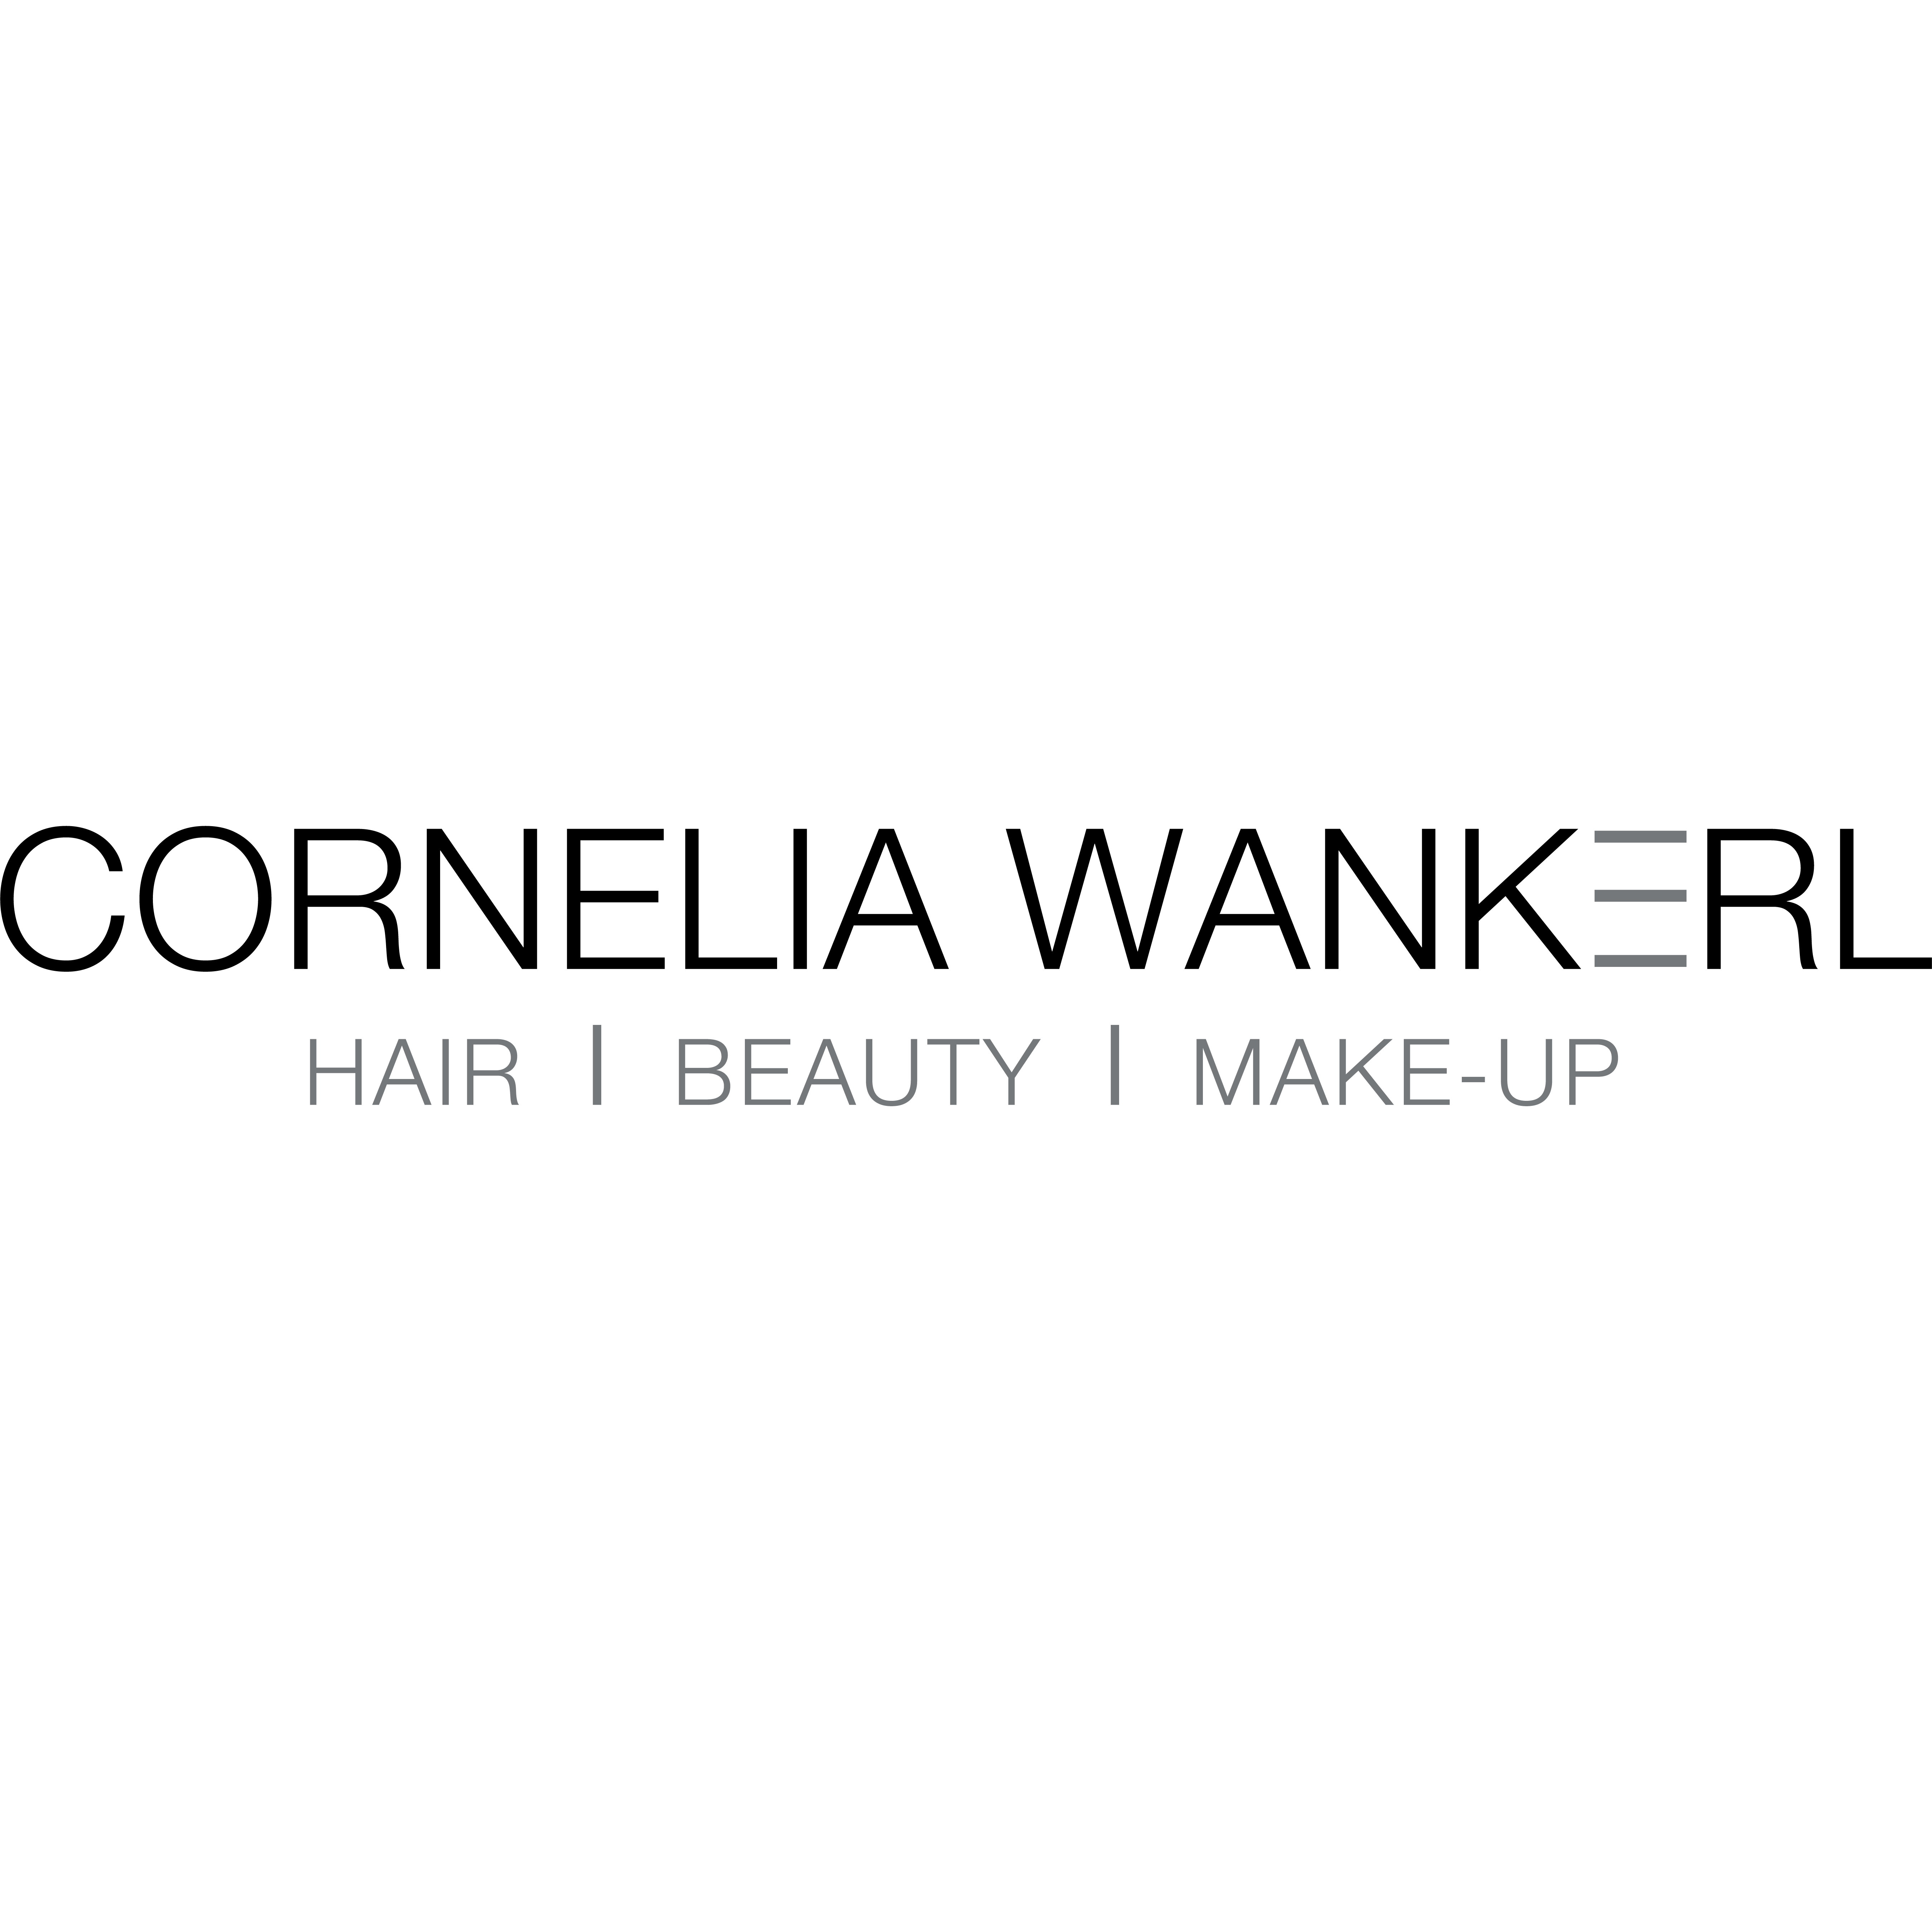 FRISEUR CORNELIA WANKERL HAIR BEAUTY MAKE-UP in Regensburg - Logo